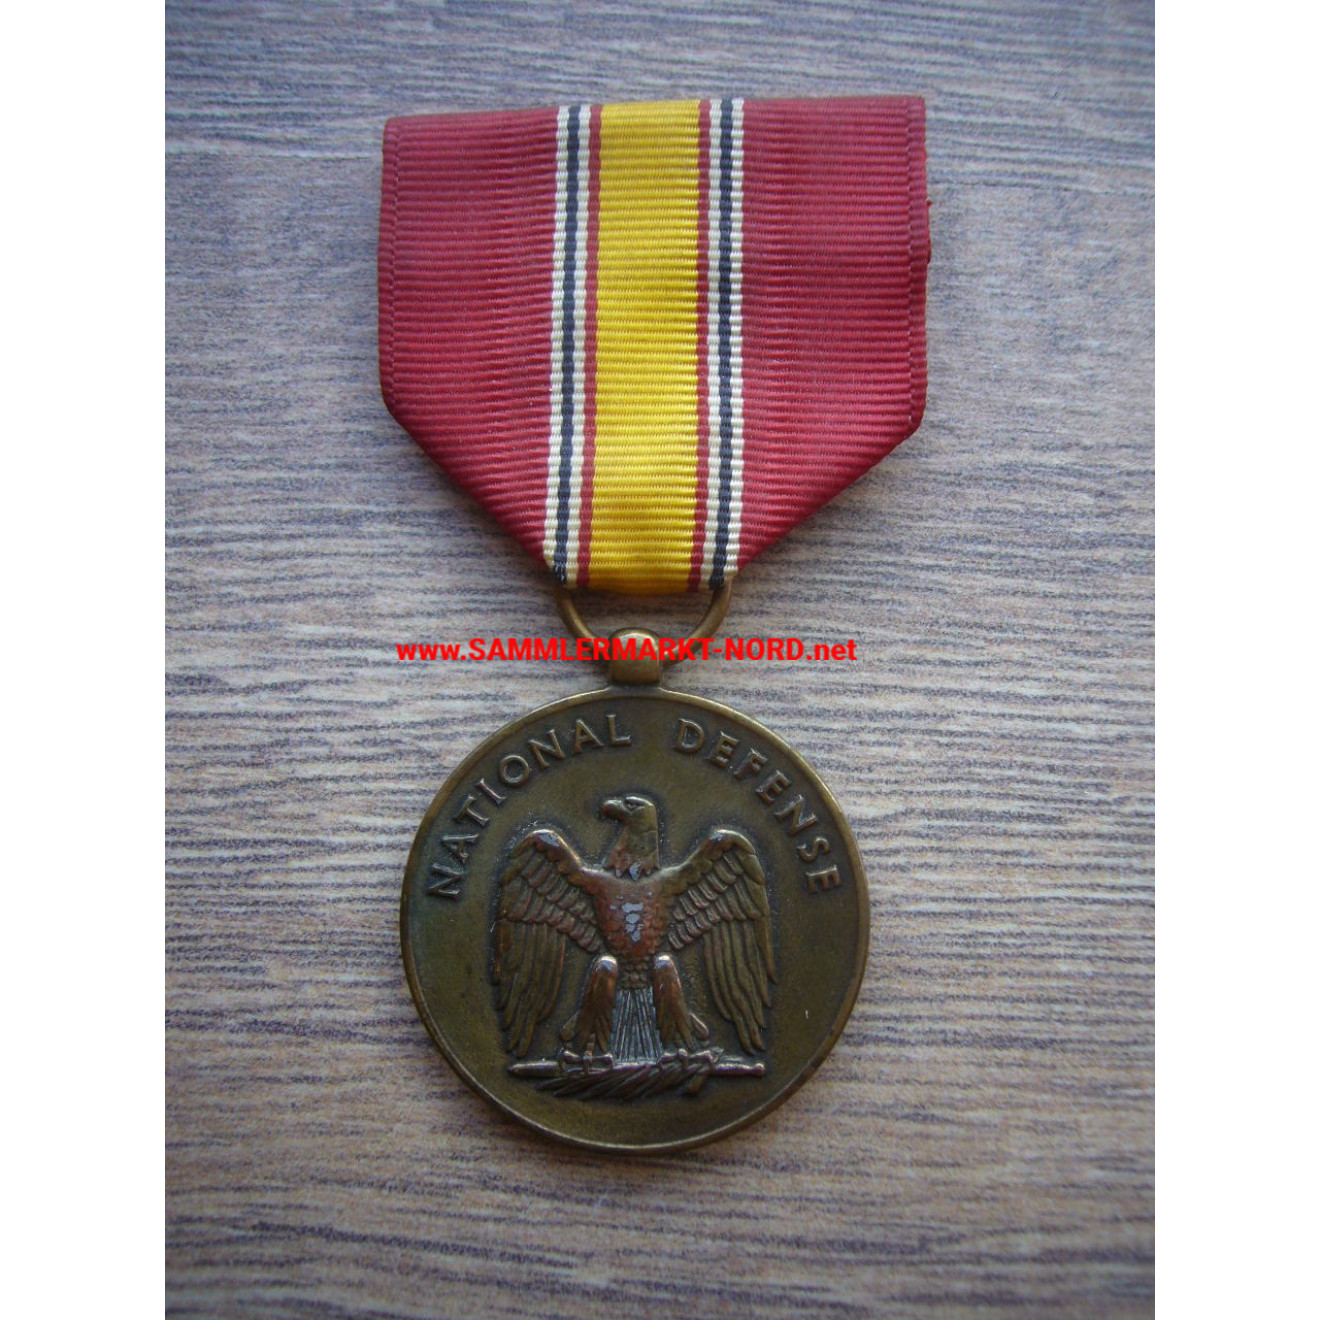 USA - National Defence Medal